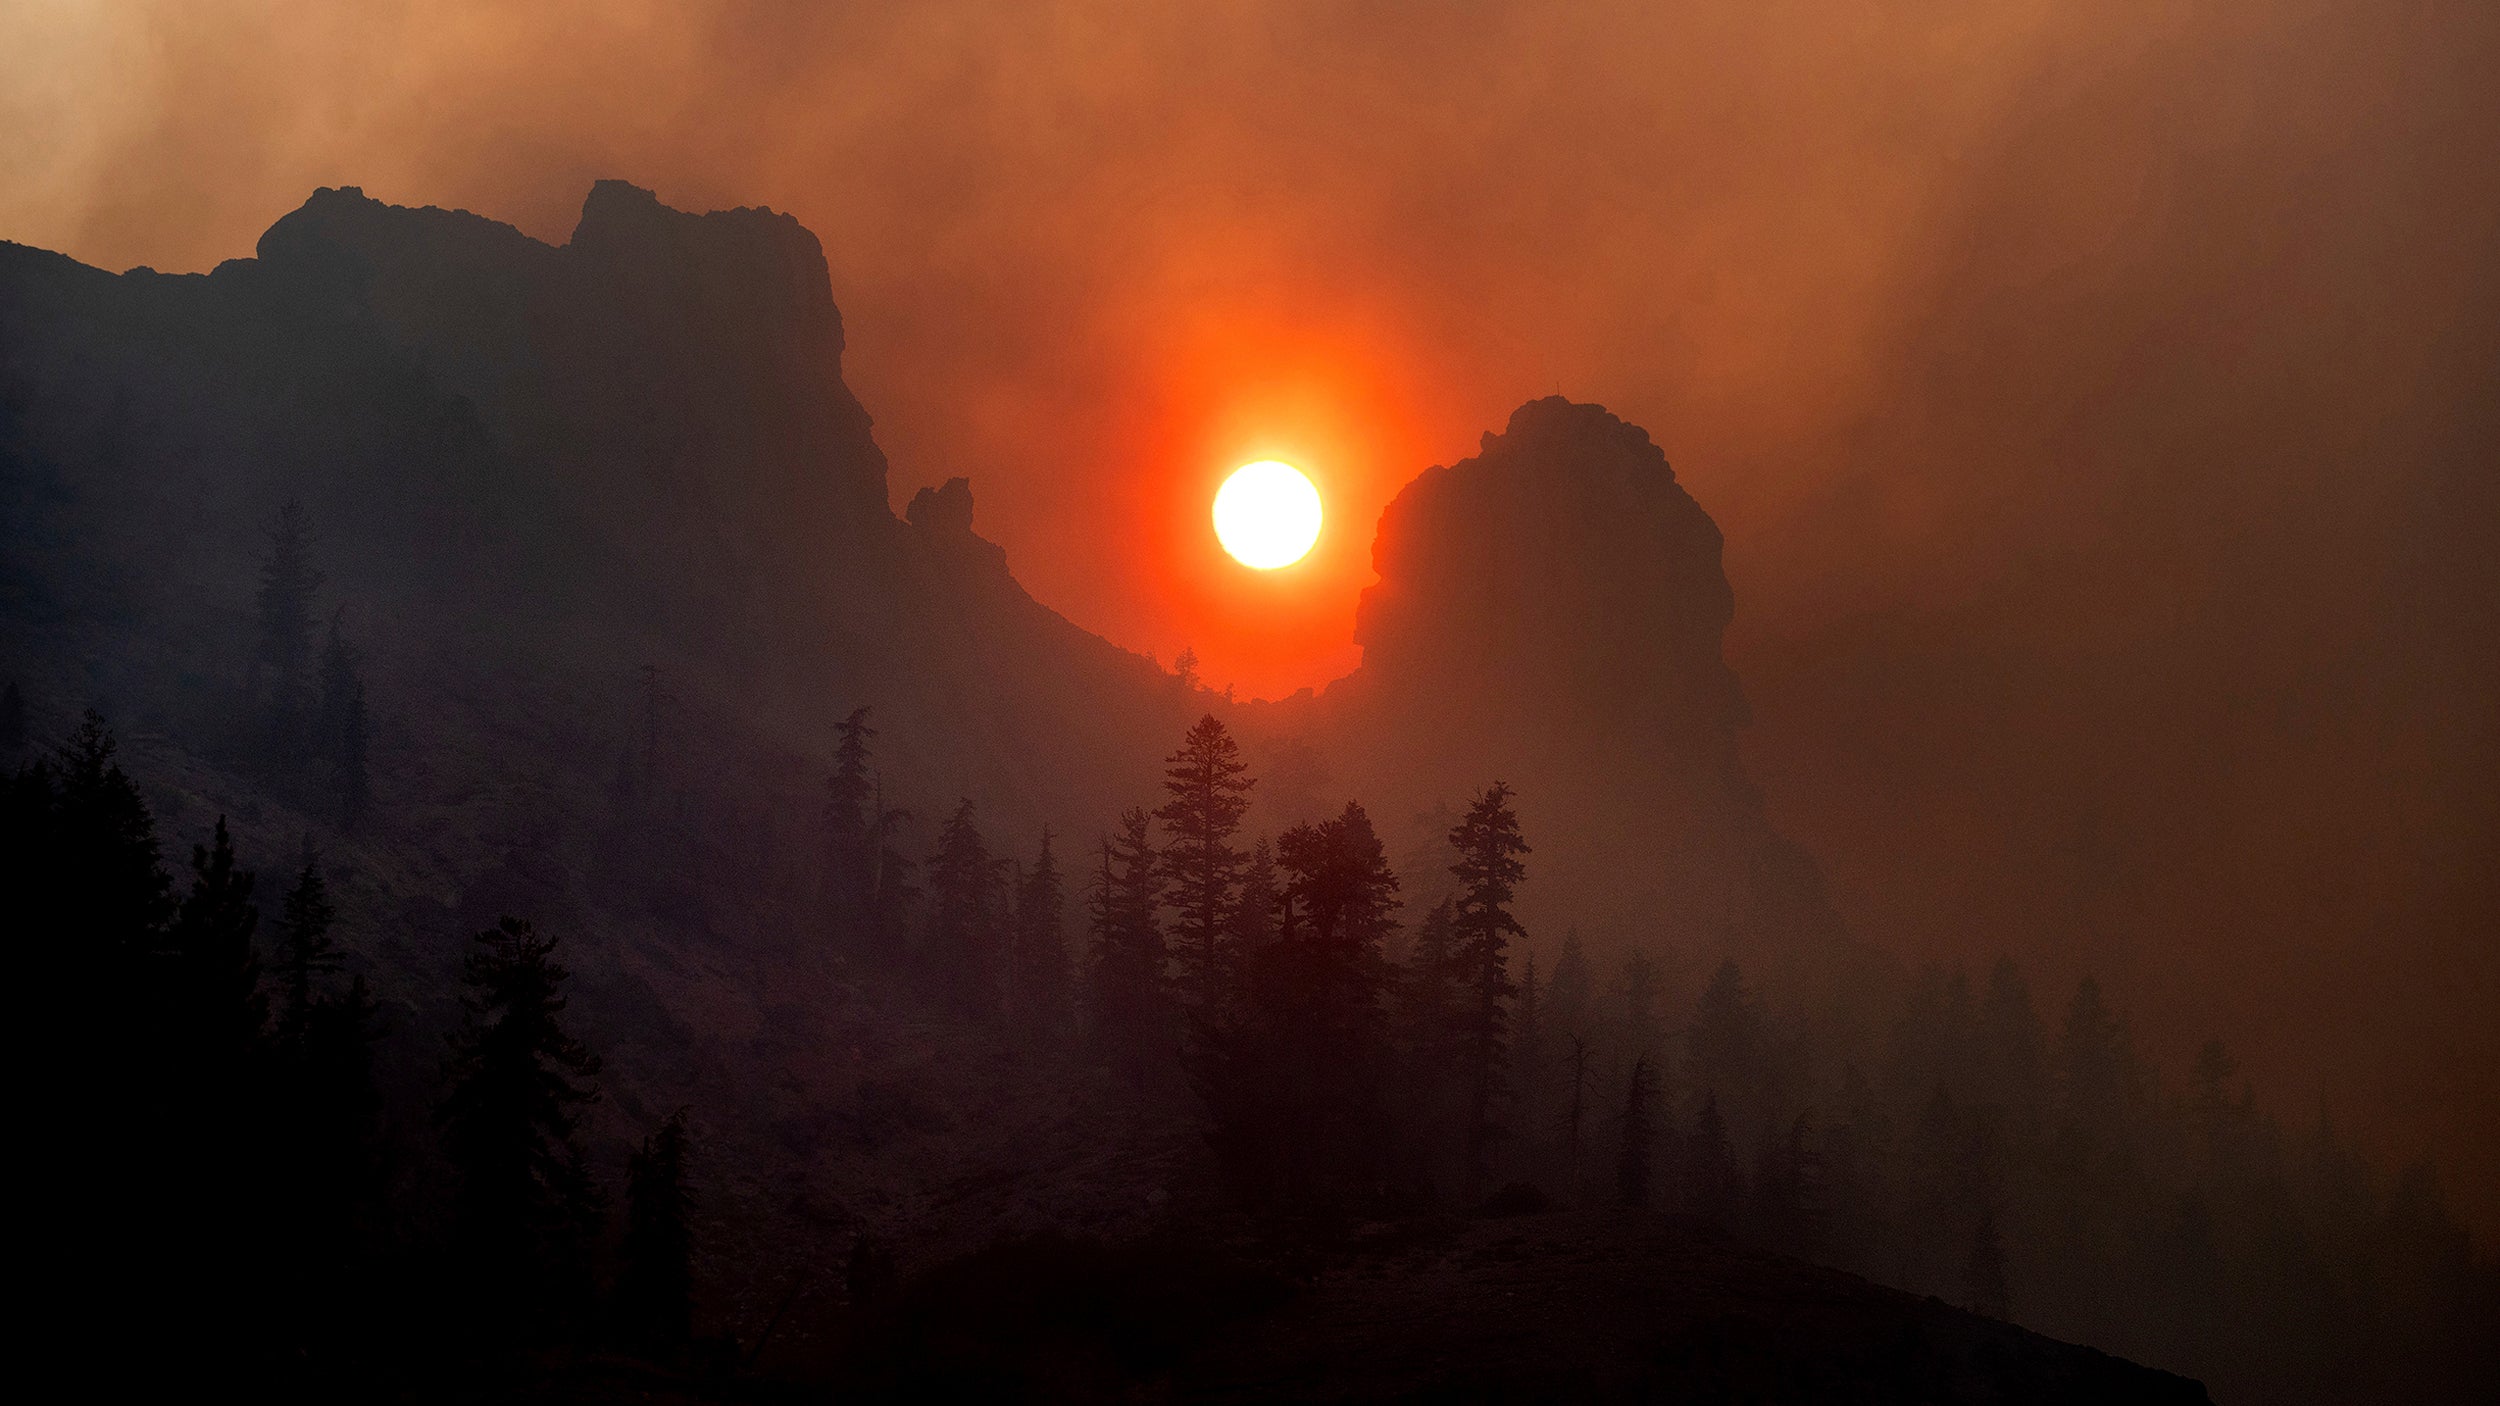 Caldor Fire creates smoky orange sky above Sierra Nevada mountains.